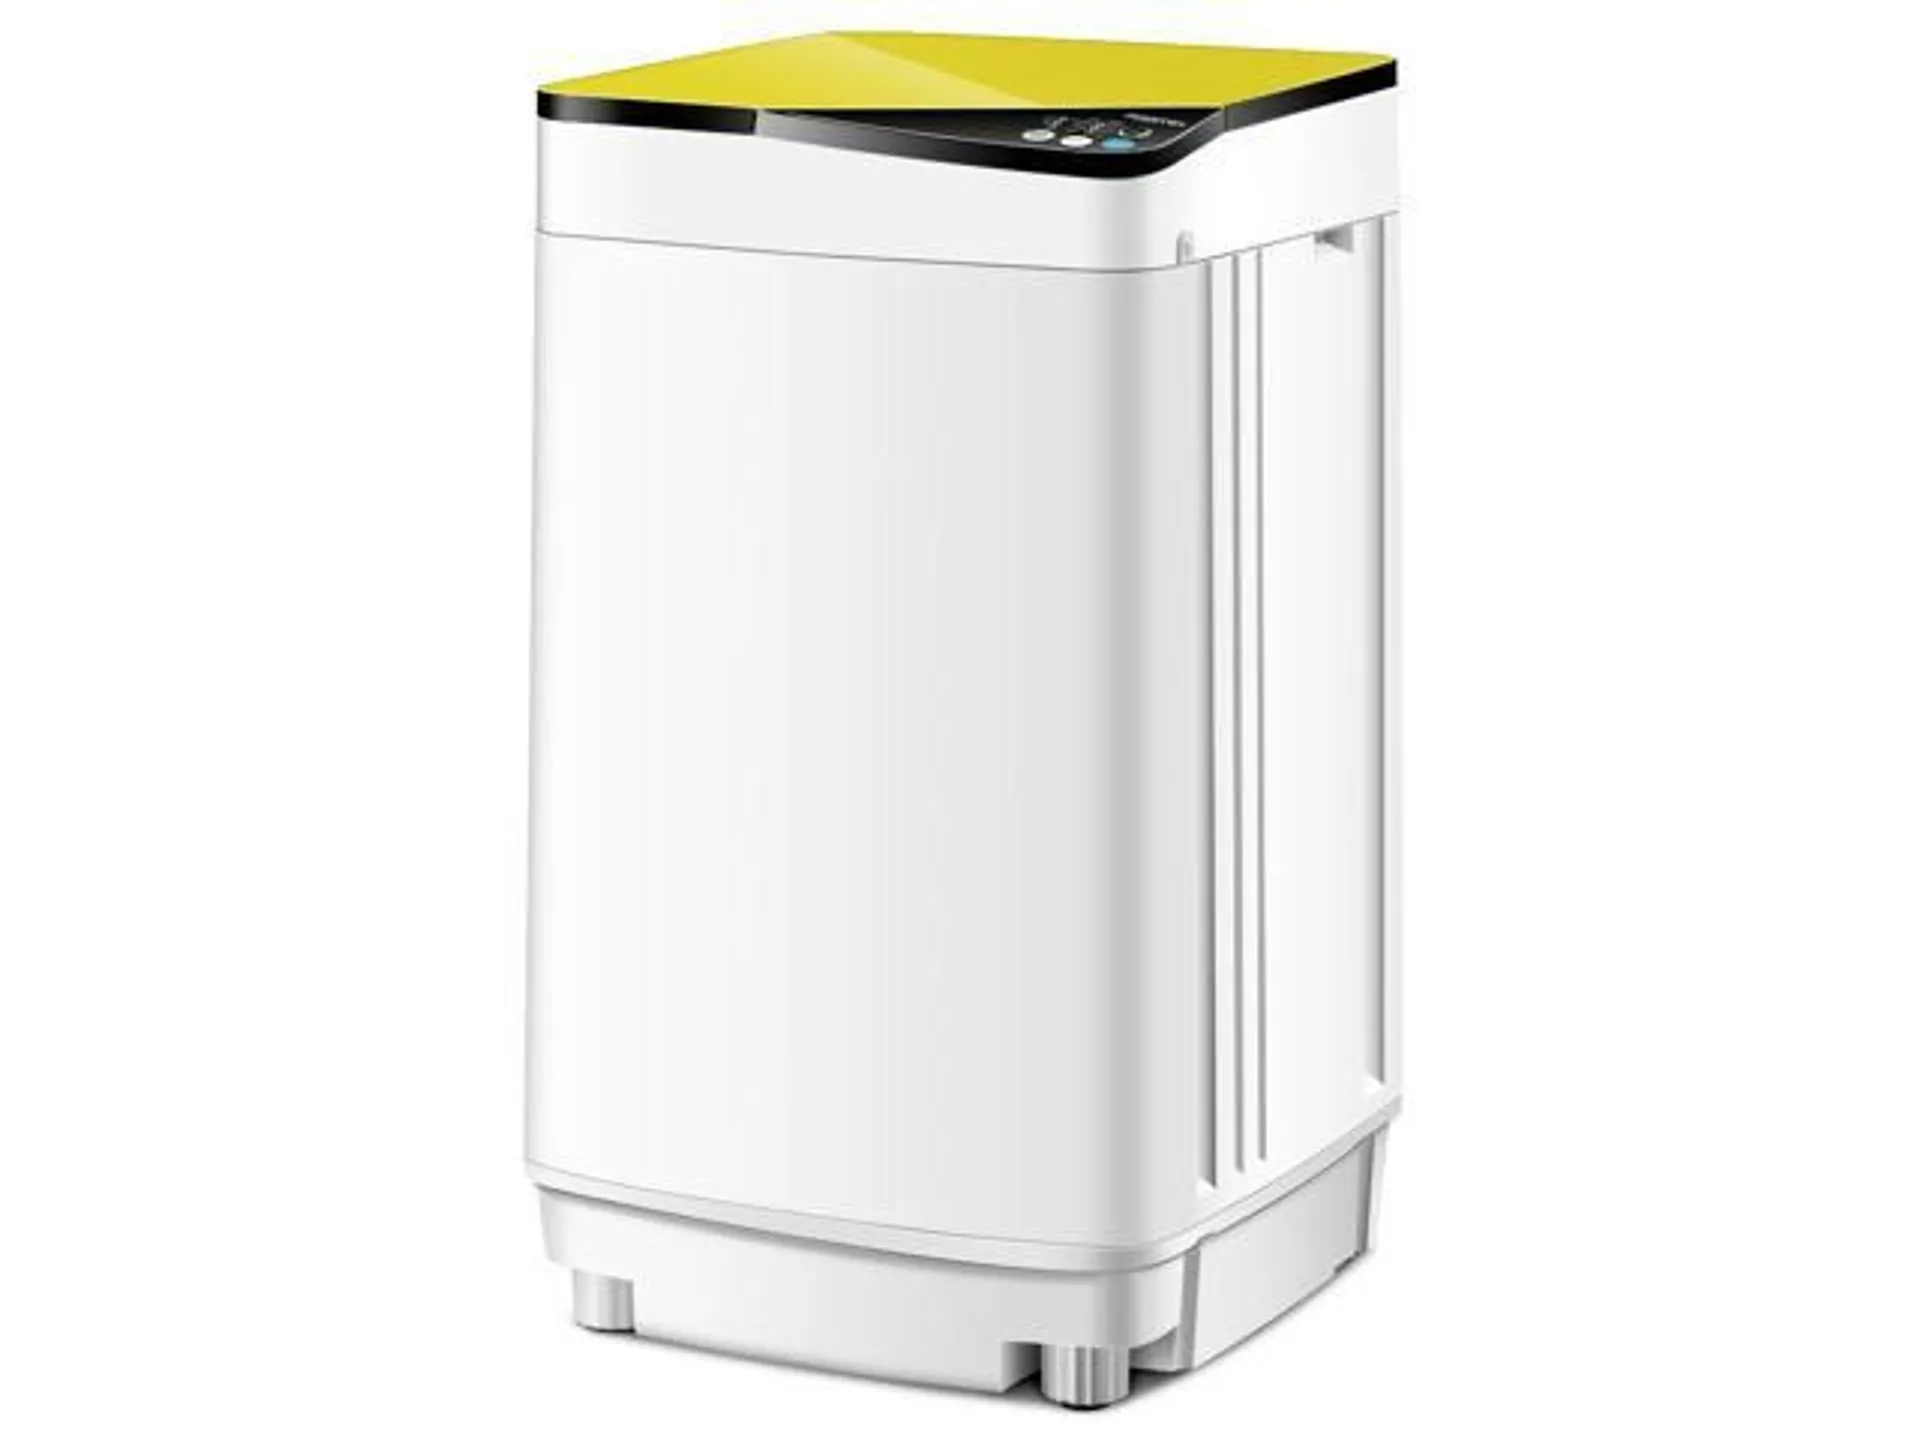 Full-Automatic Washing Machine 7.7 lbs Washer/Spinner Germicidal UV Light Yellow